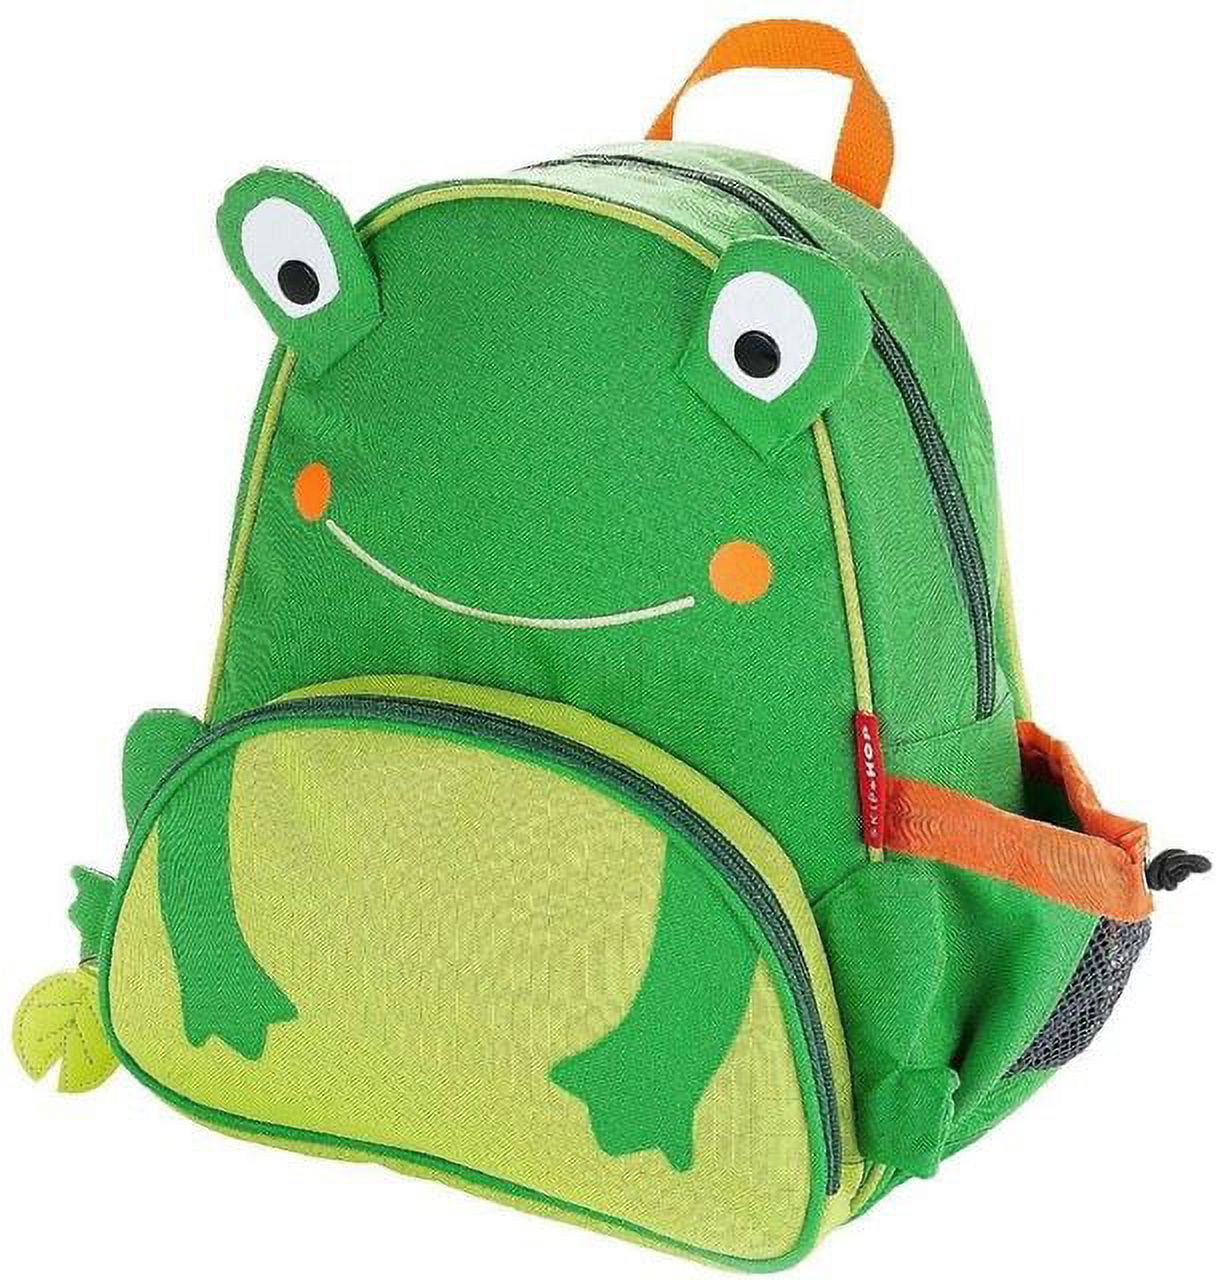 Zoo Big Kid Backpack - Butterfly